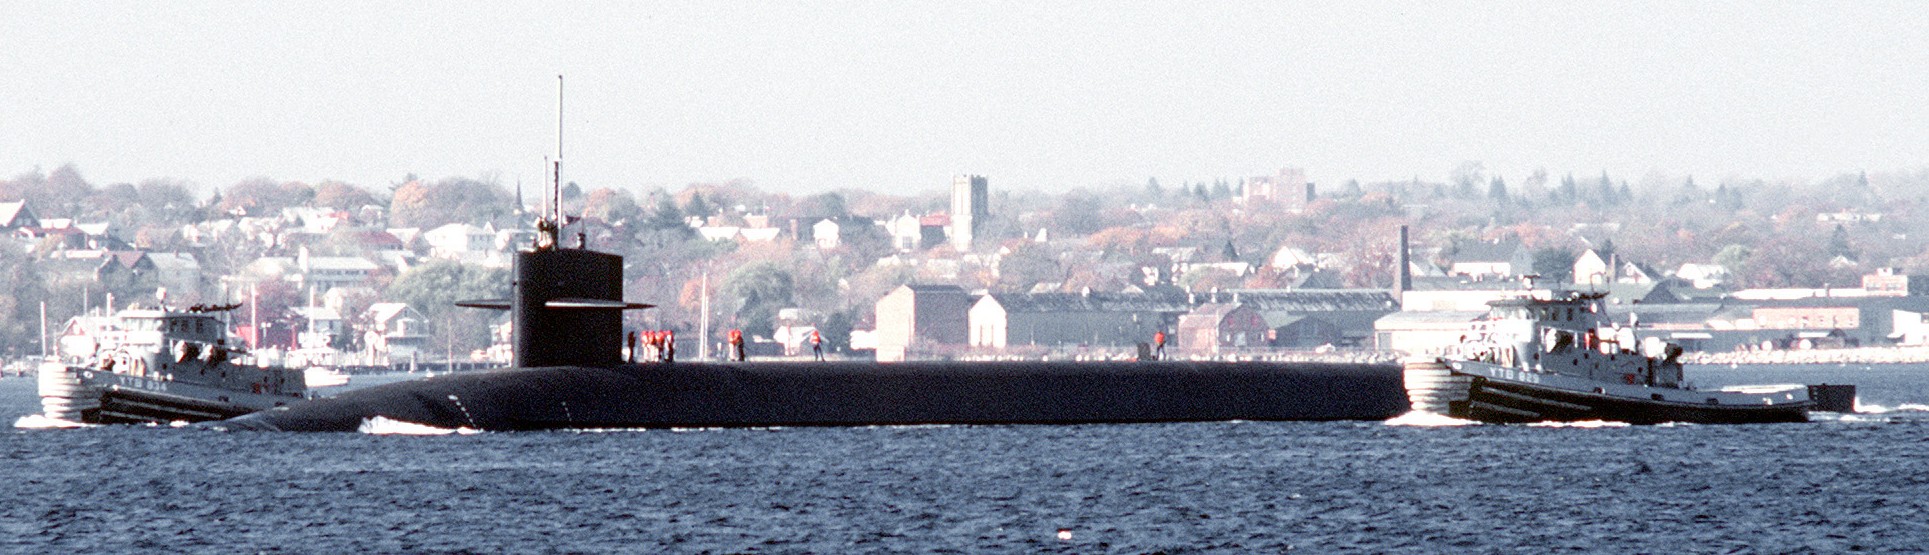 ssbn-726 uss ohio ballistic missile submarine us navy 198192 trials